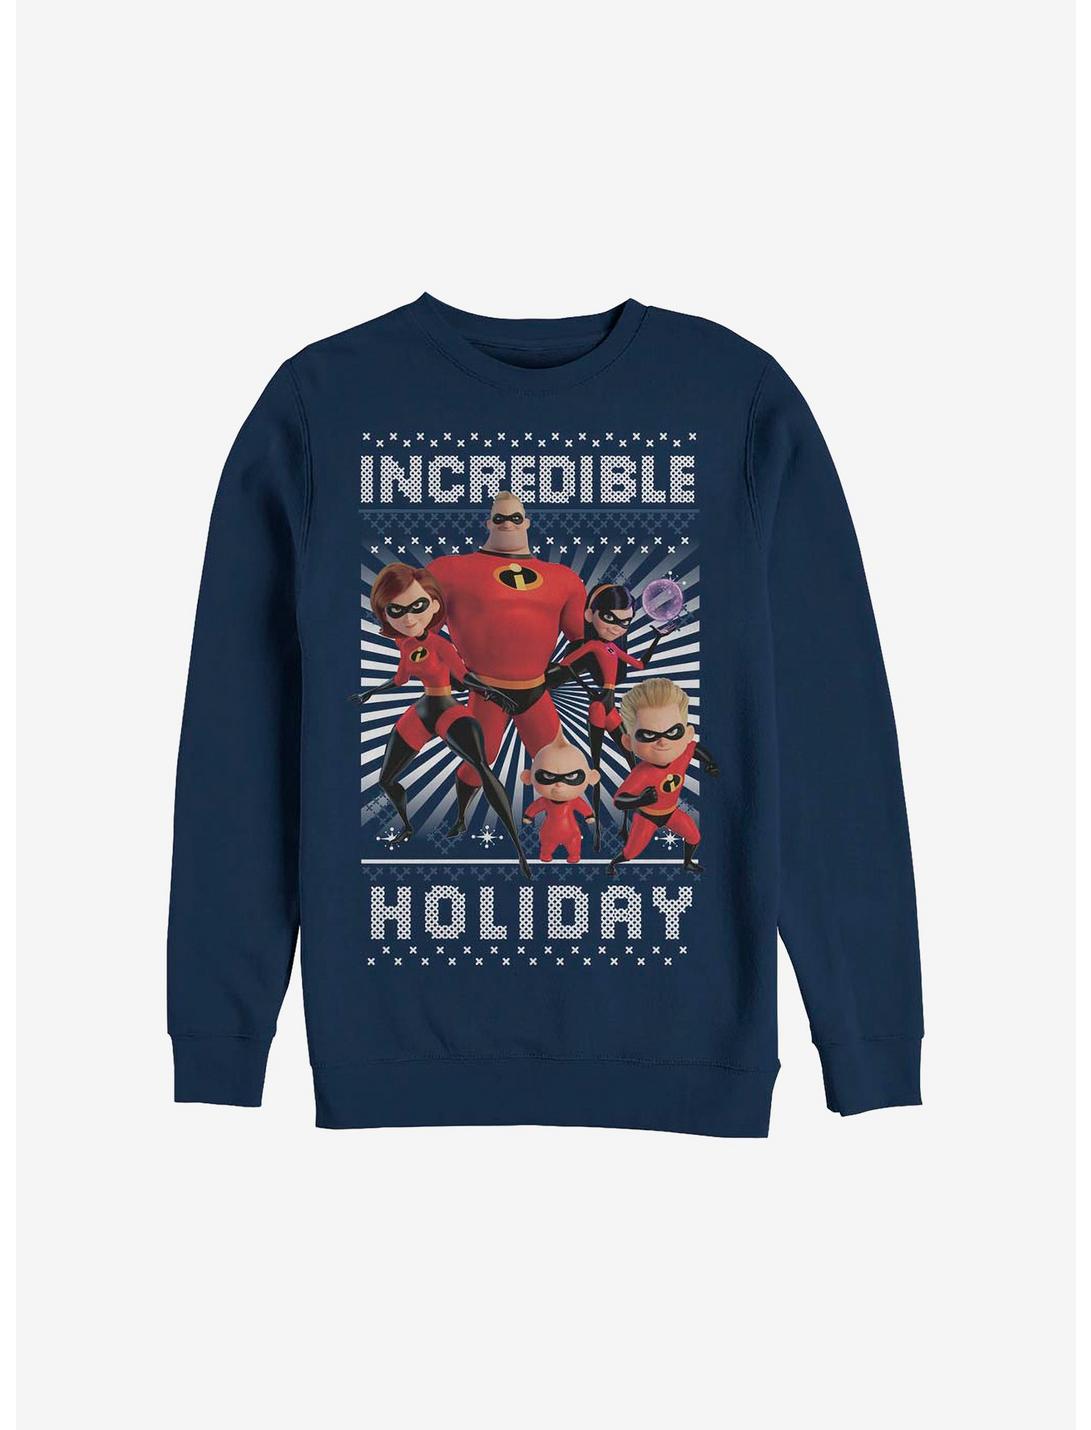 Disney Pixar The Incredibles Incredible Holiday Ugly Christmas Sweater Sweatshirt, NAVY, hi-res